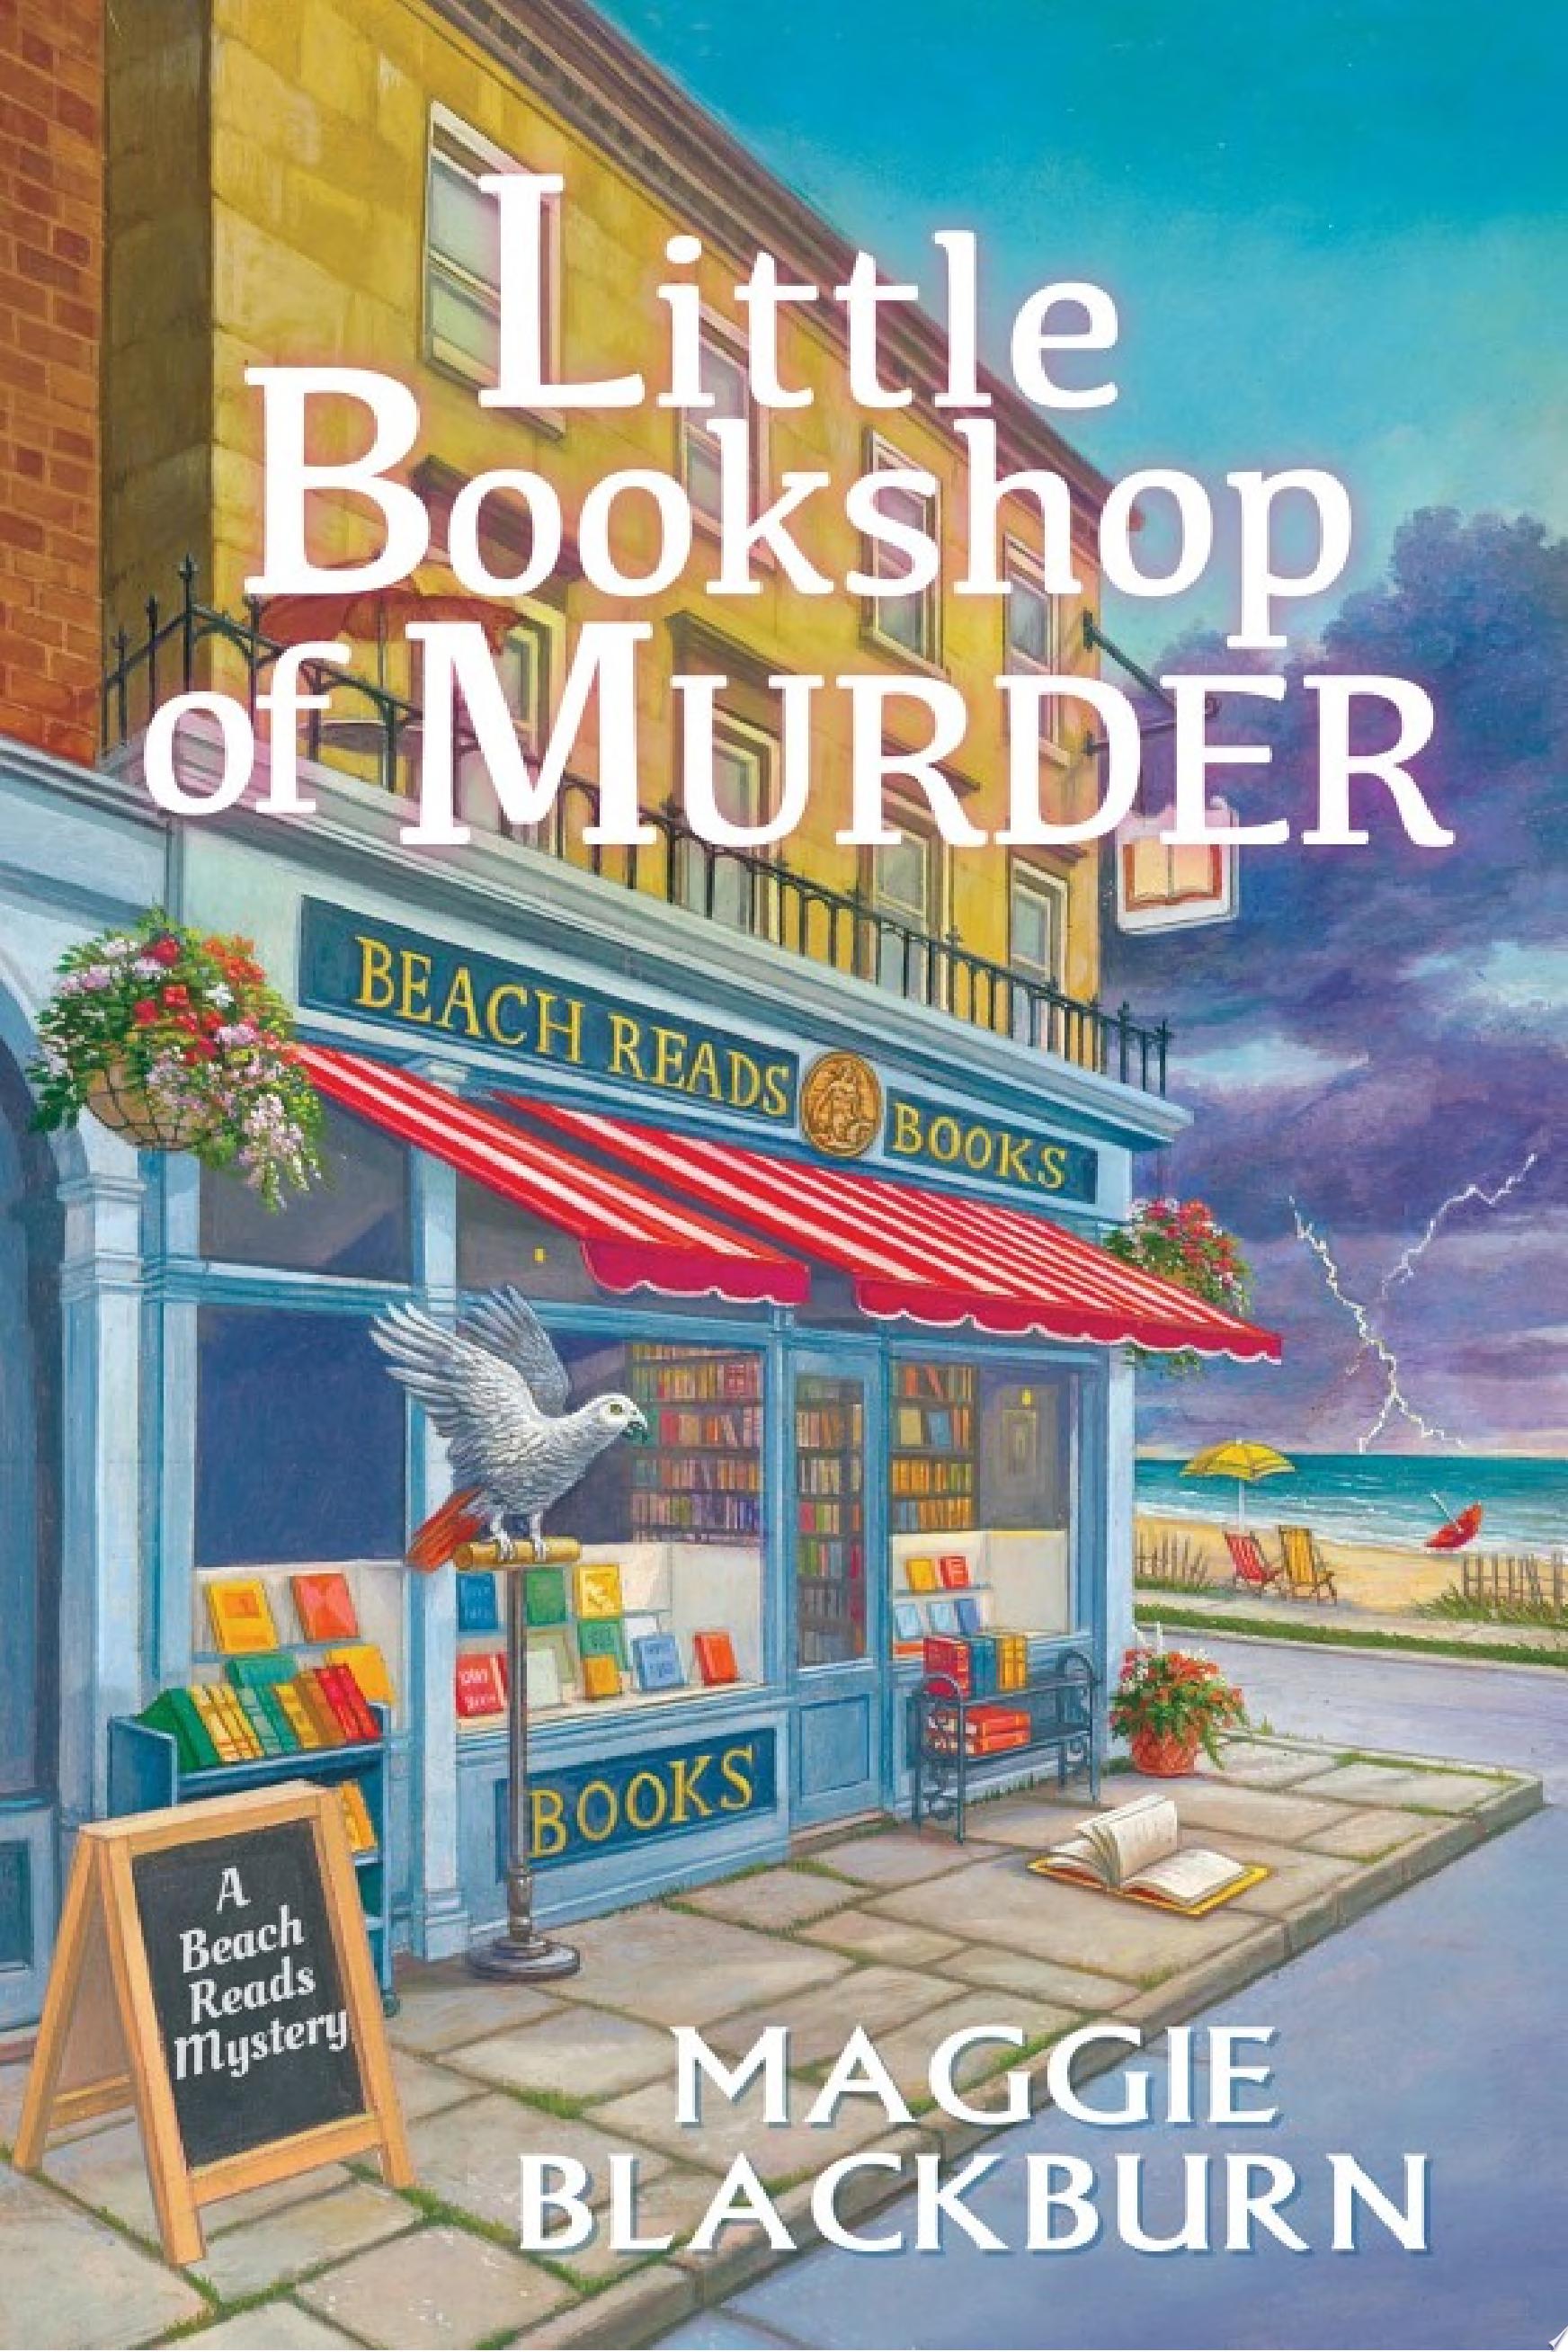 Image for "Little Bookshop of Murder"